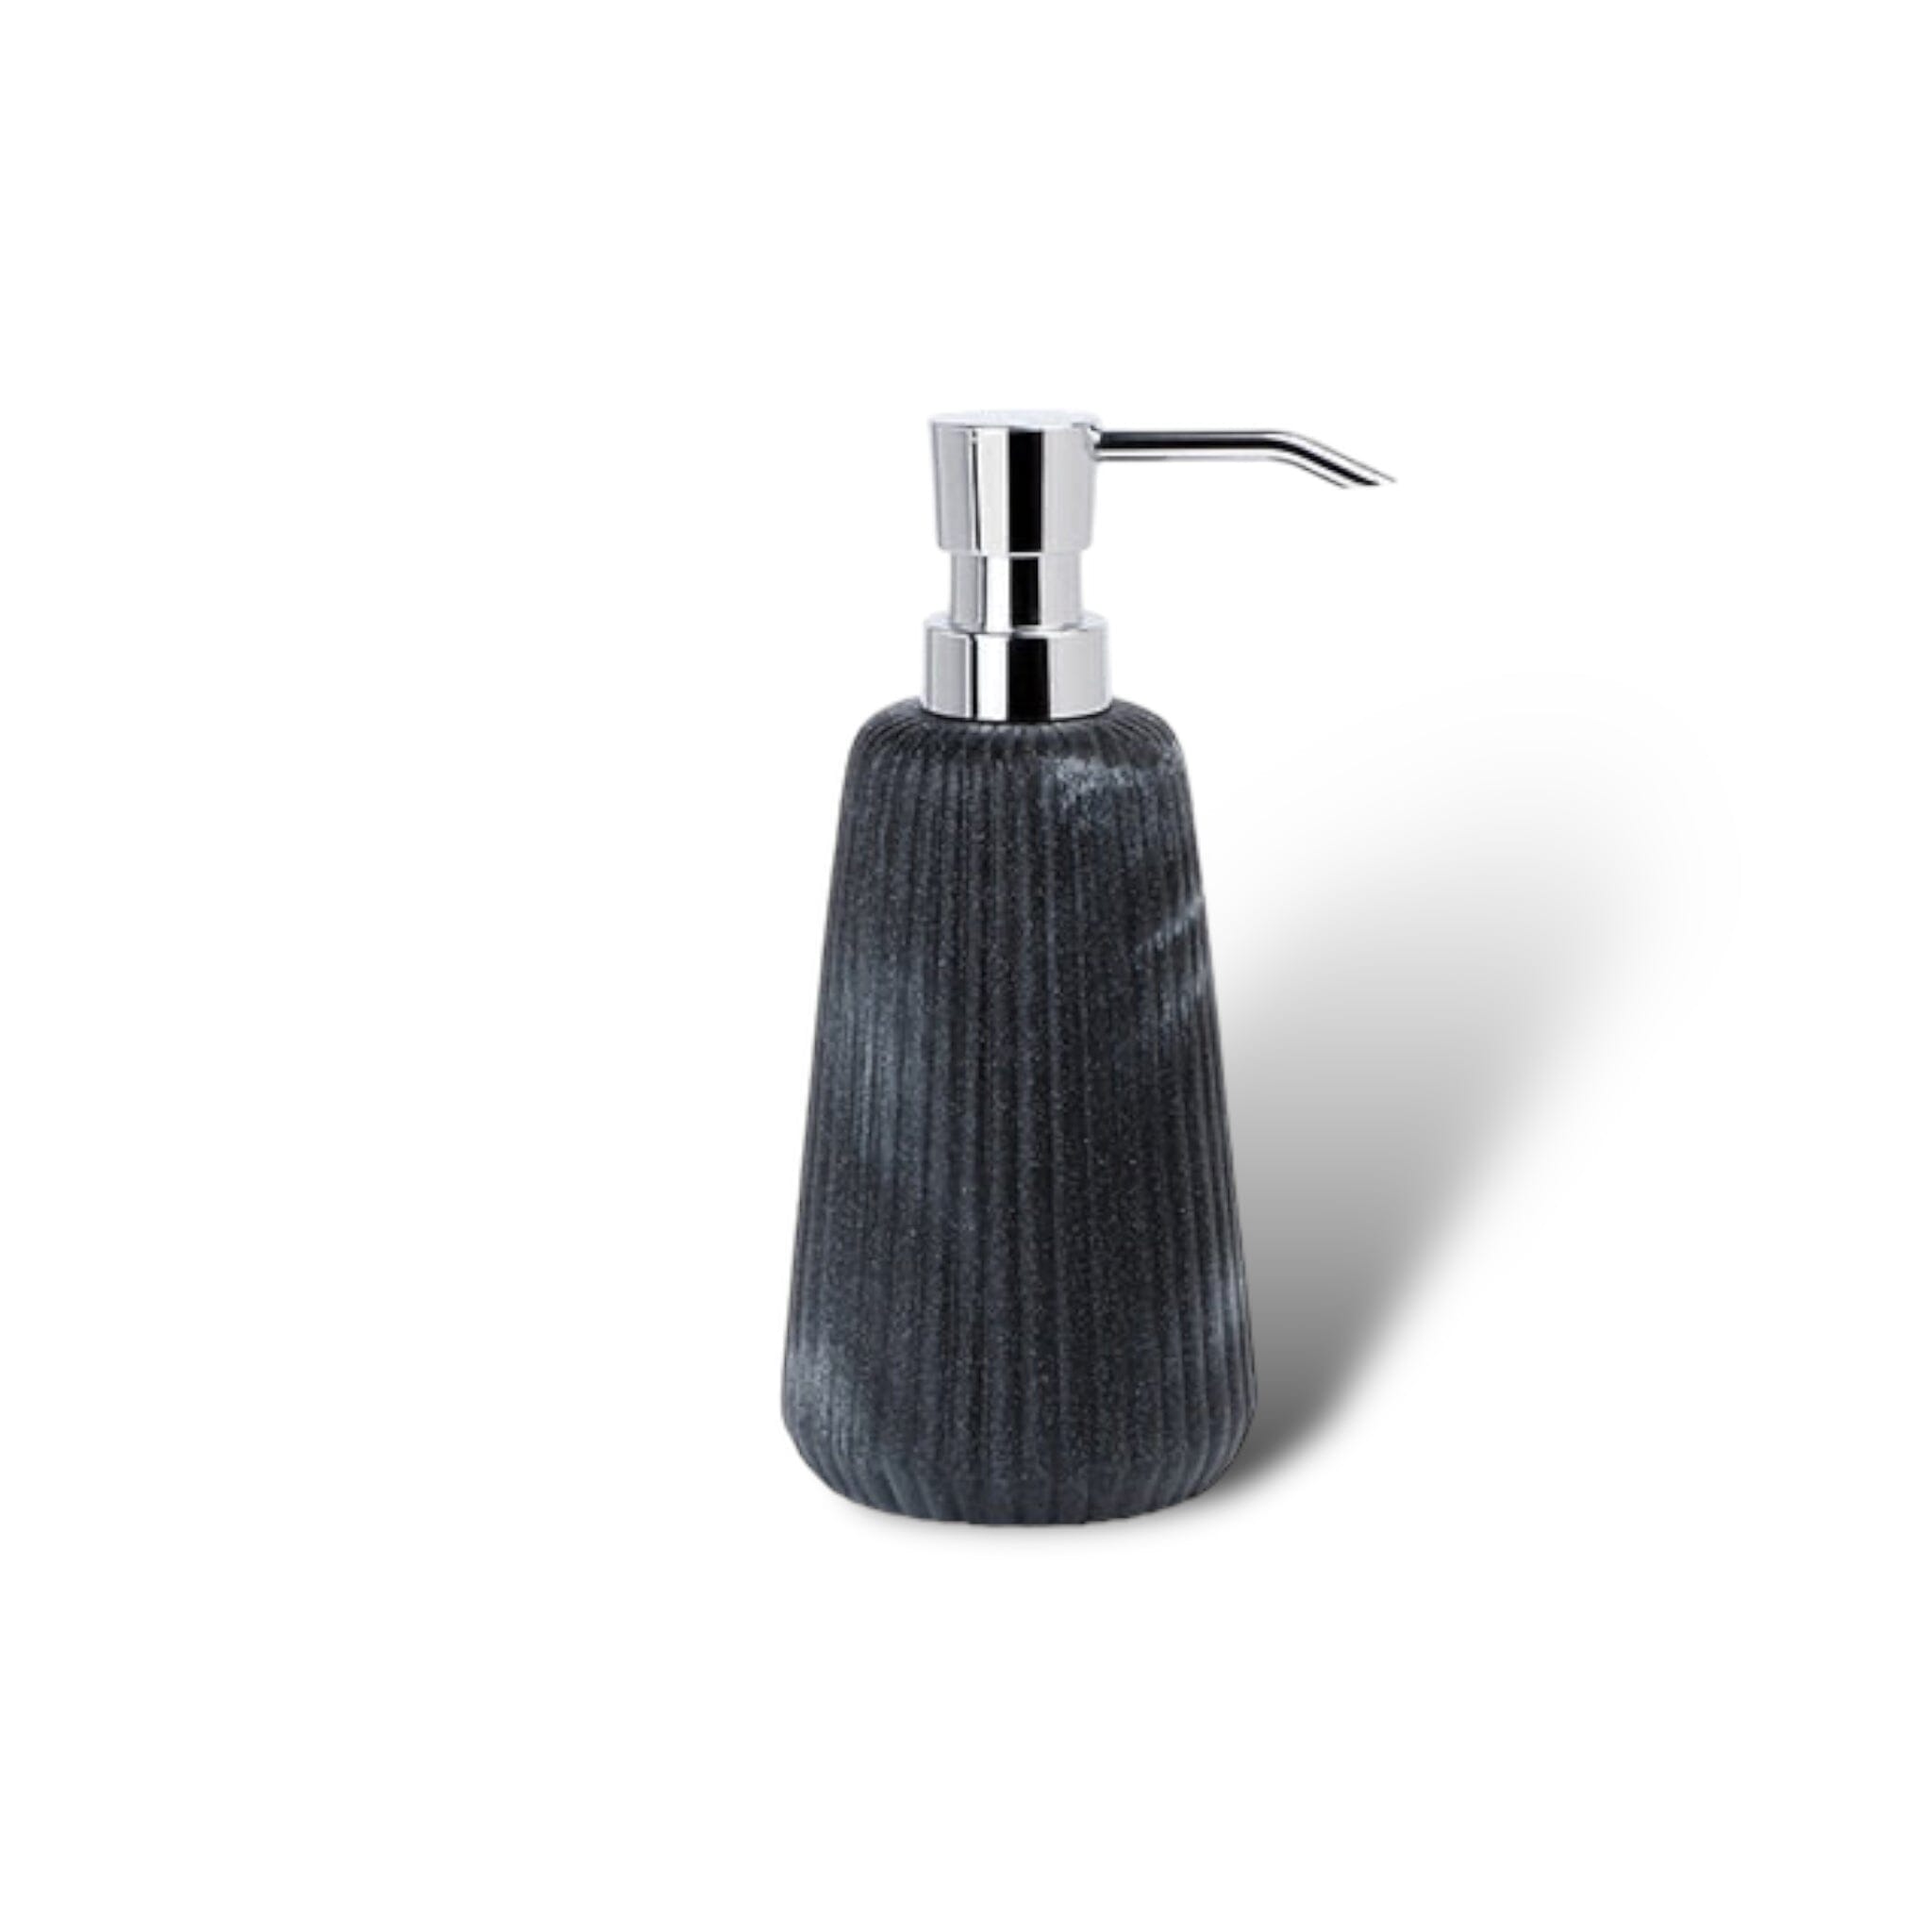 Raine Bathroom Accessories Bathroom Accessories Black & Silver Soap Dispenser 